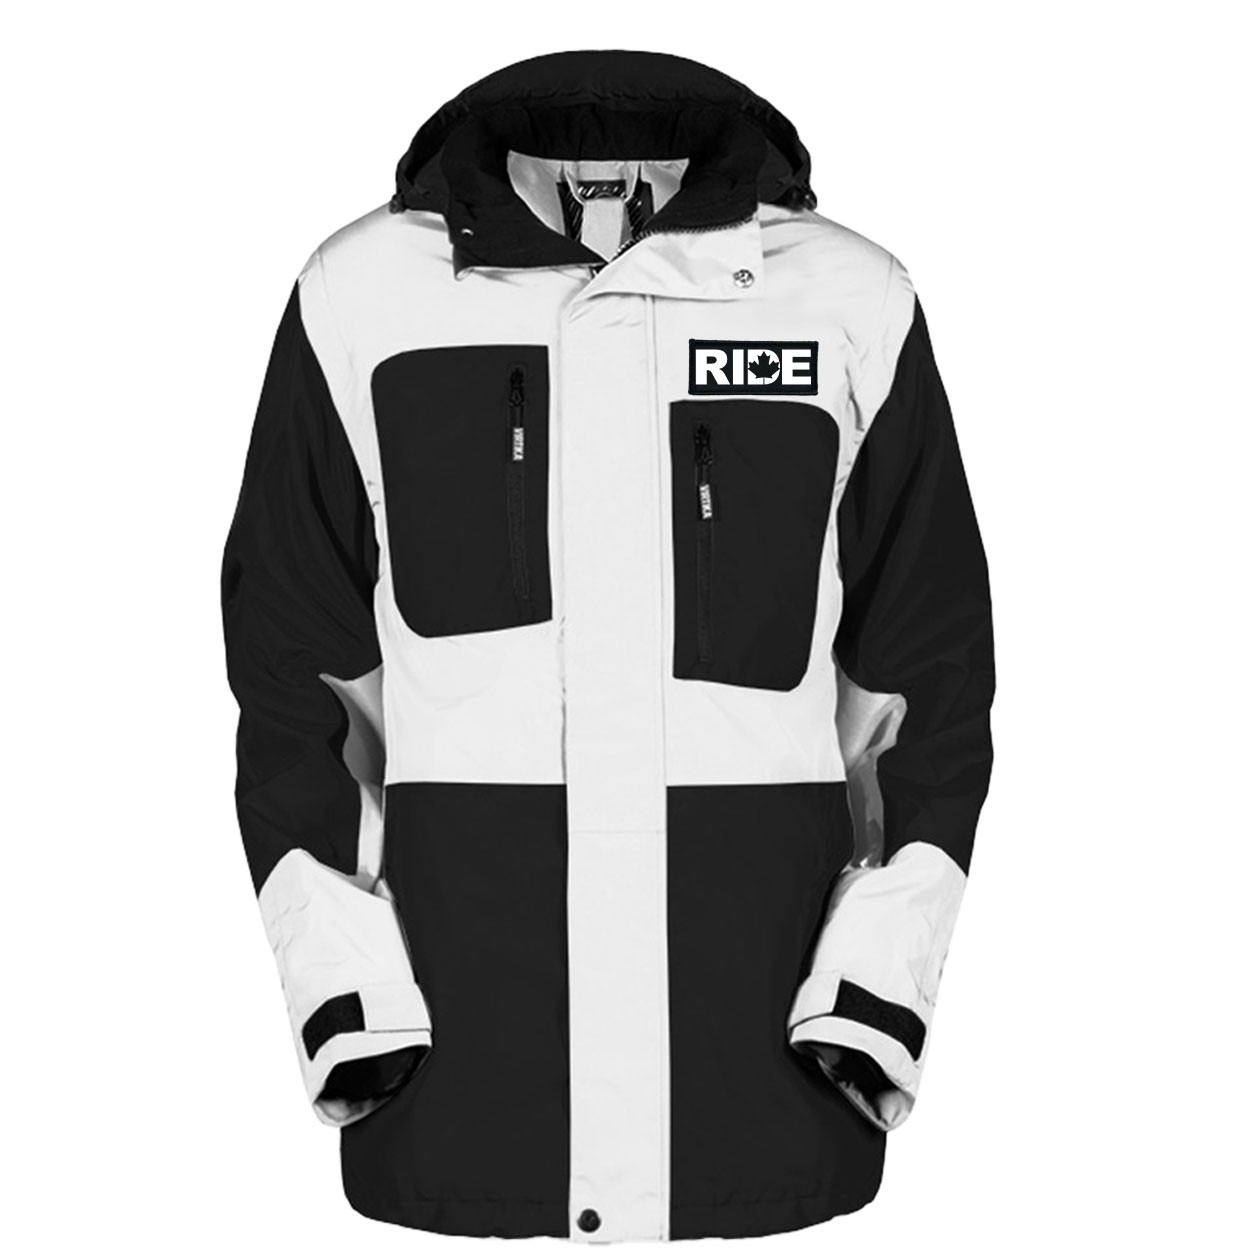 Ride Canada Pro Waterproof Breathable Winter Virtika Jacket Black/White (White Logo)